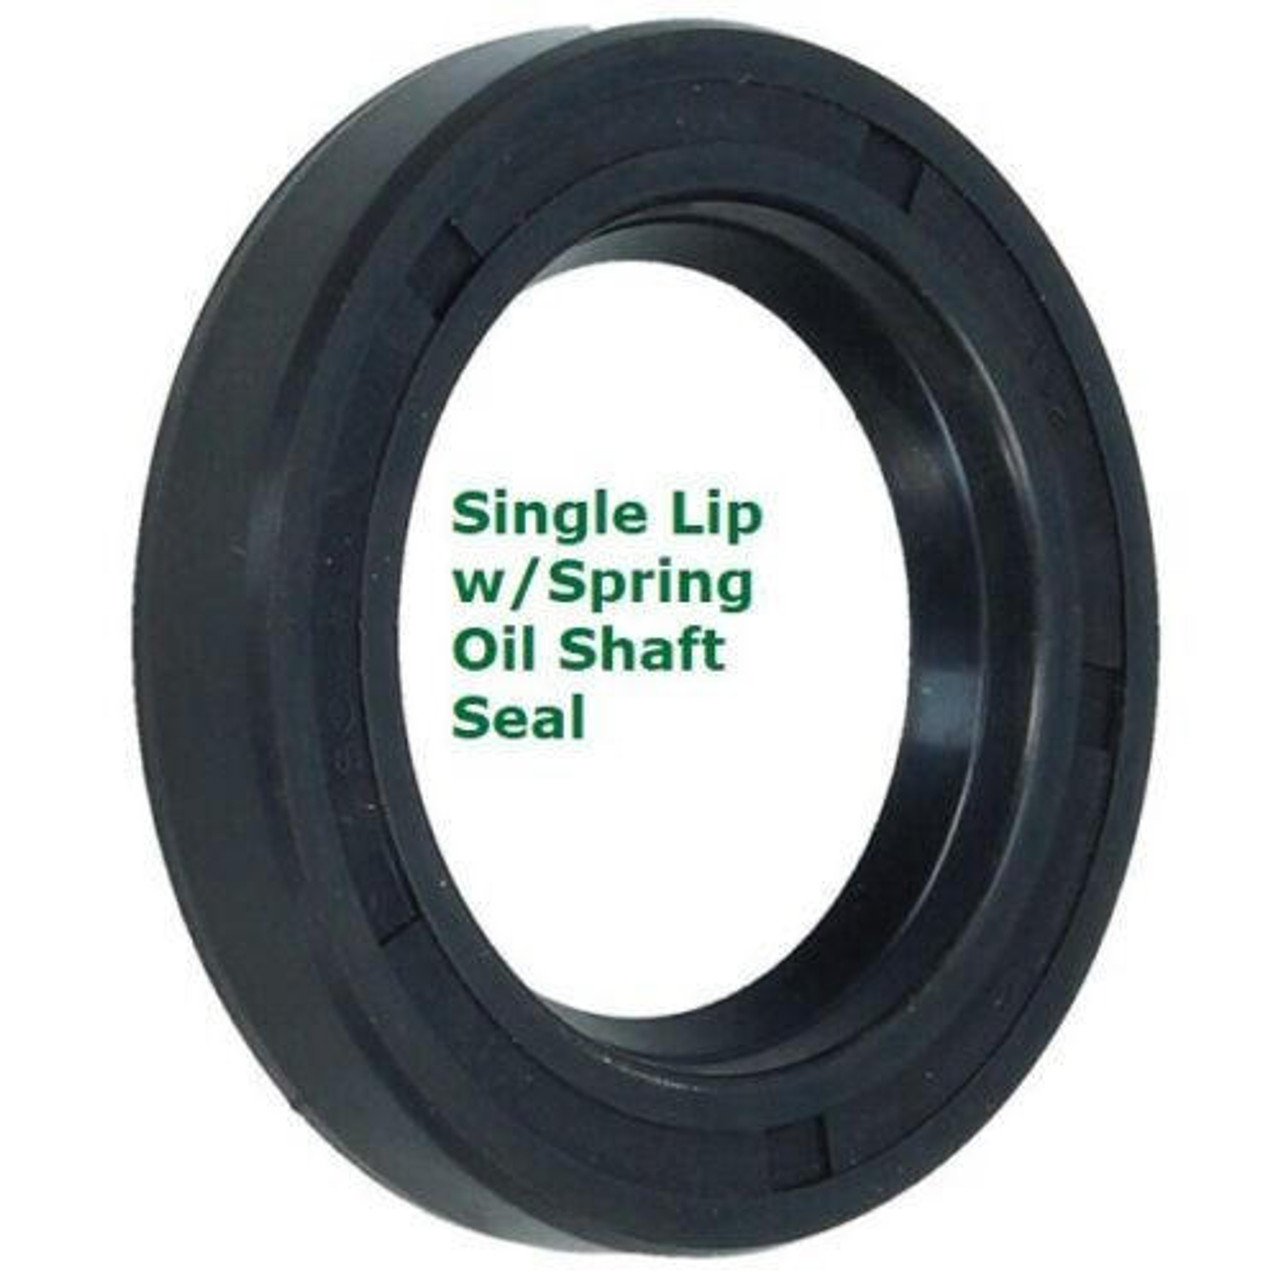 Metric Oil Shaft Seal 110 x 155 x 15mm   Single Lip   Price for 1 pc